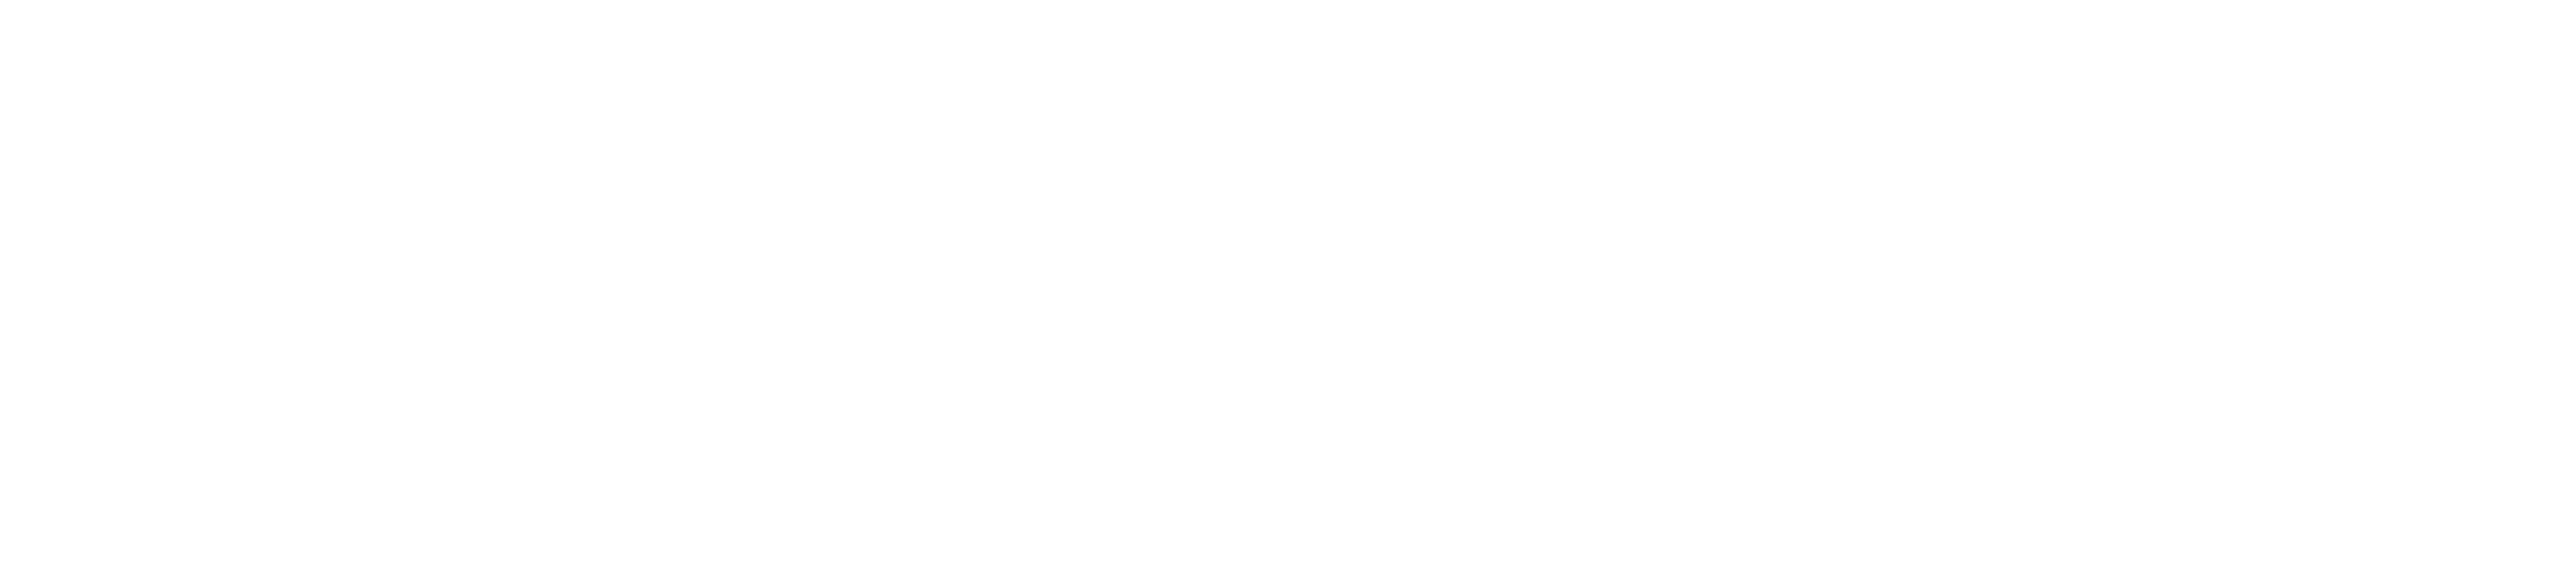 aether logo long